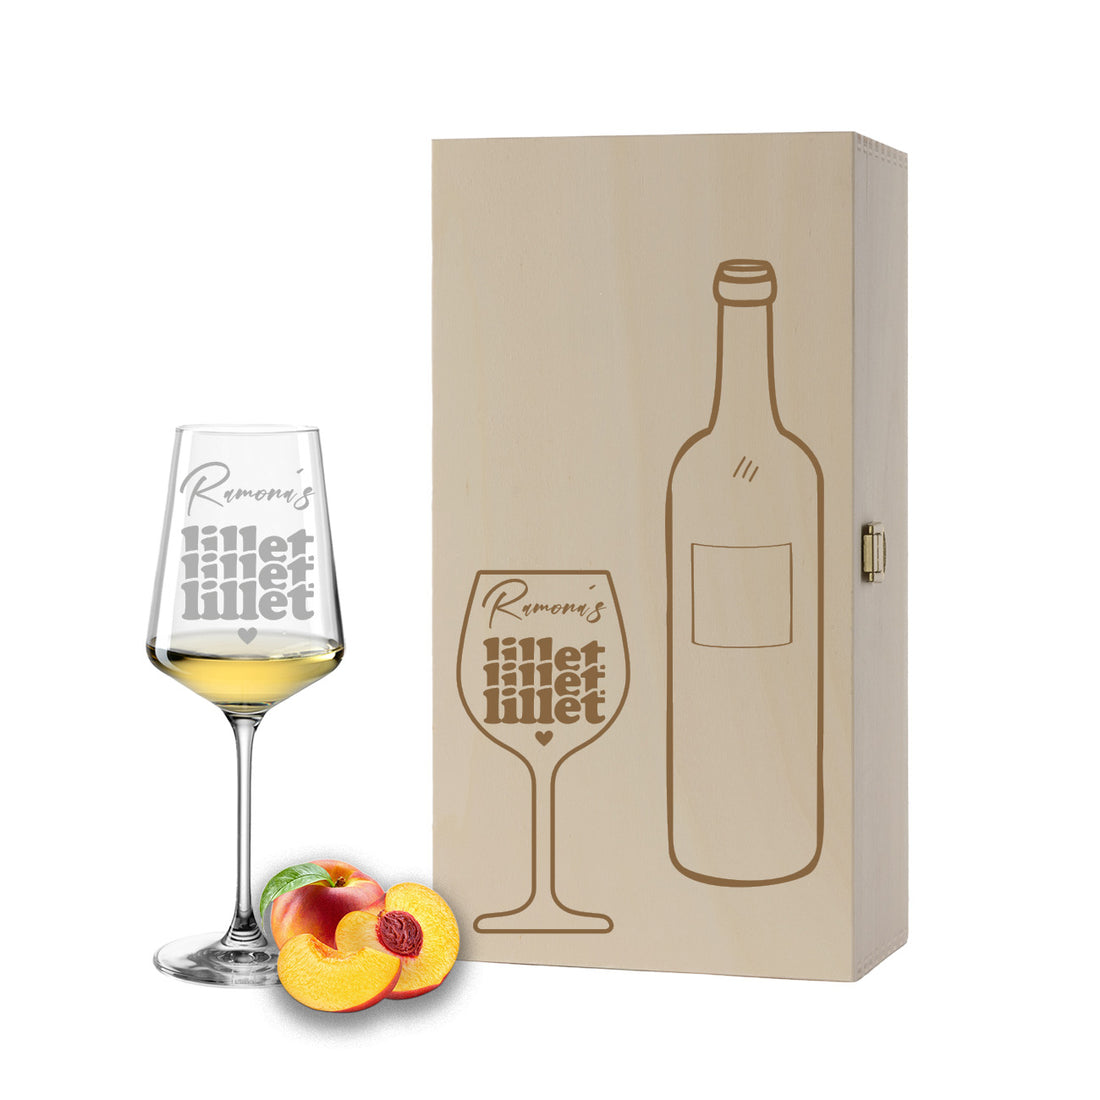 Weinglas mit Gravur Leonardo Puccini "LILLET LILLET LILLET" inkl. Holzbox klein mit Wunschname